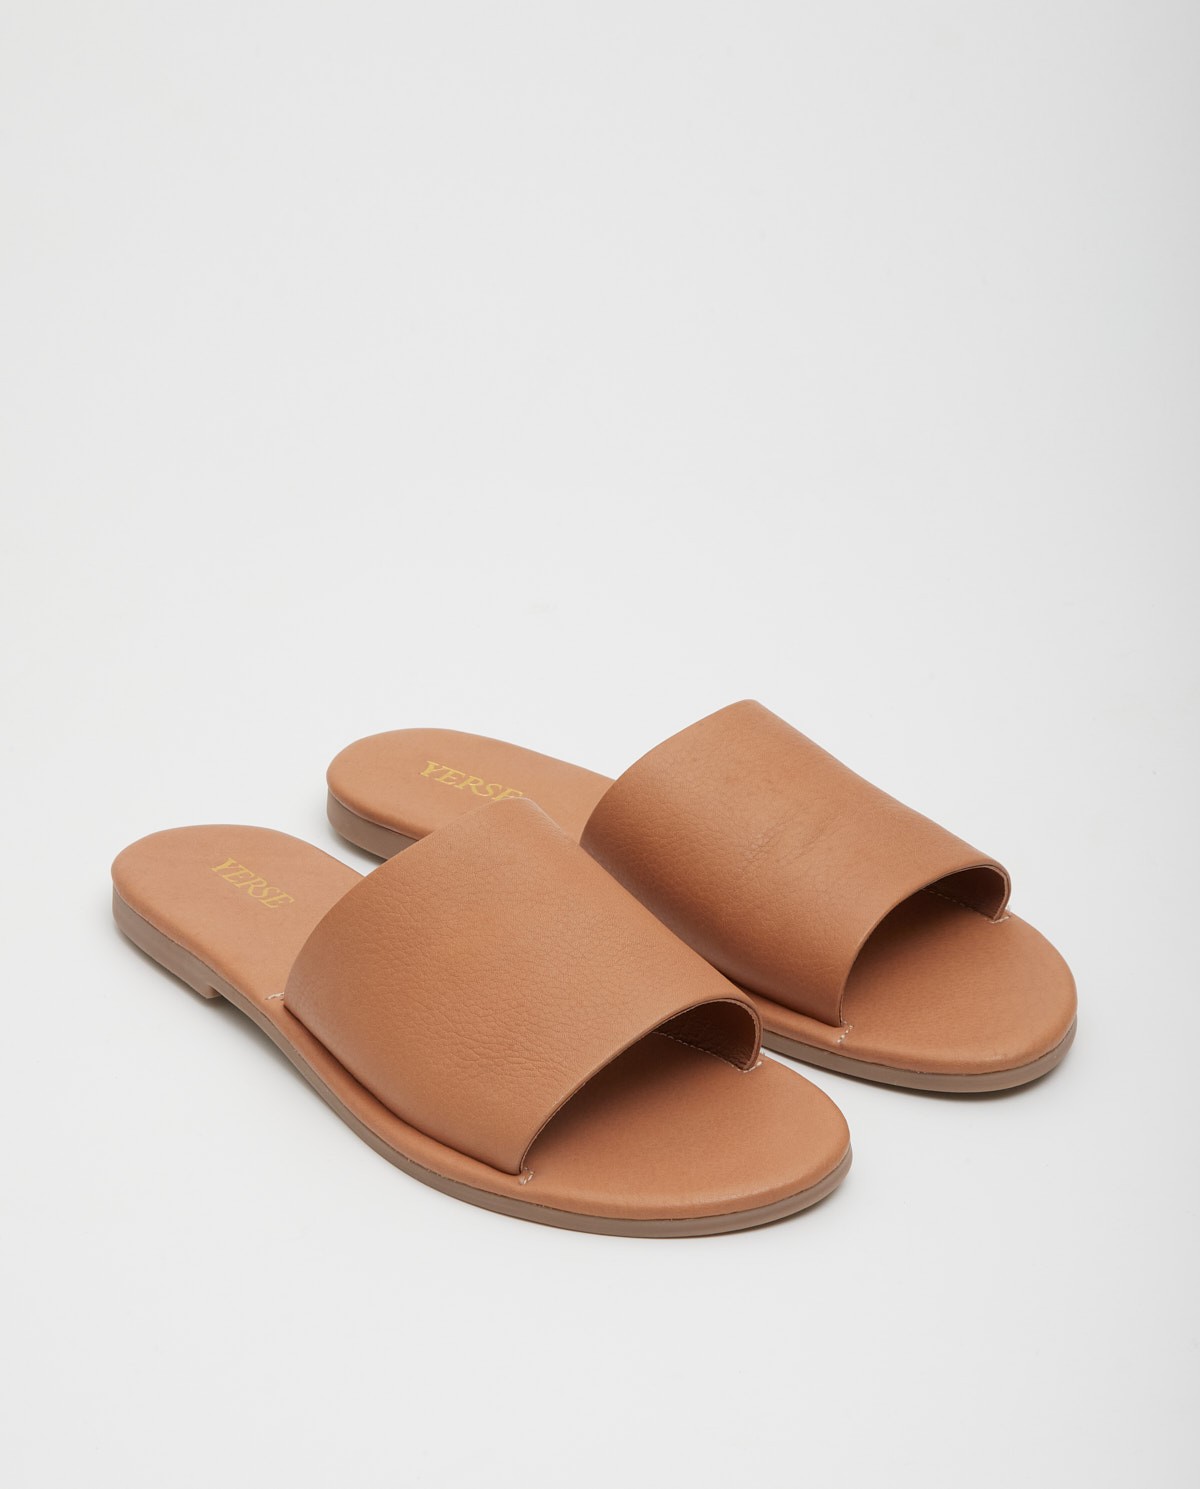 100% leather sandals CAMEL